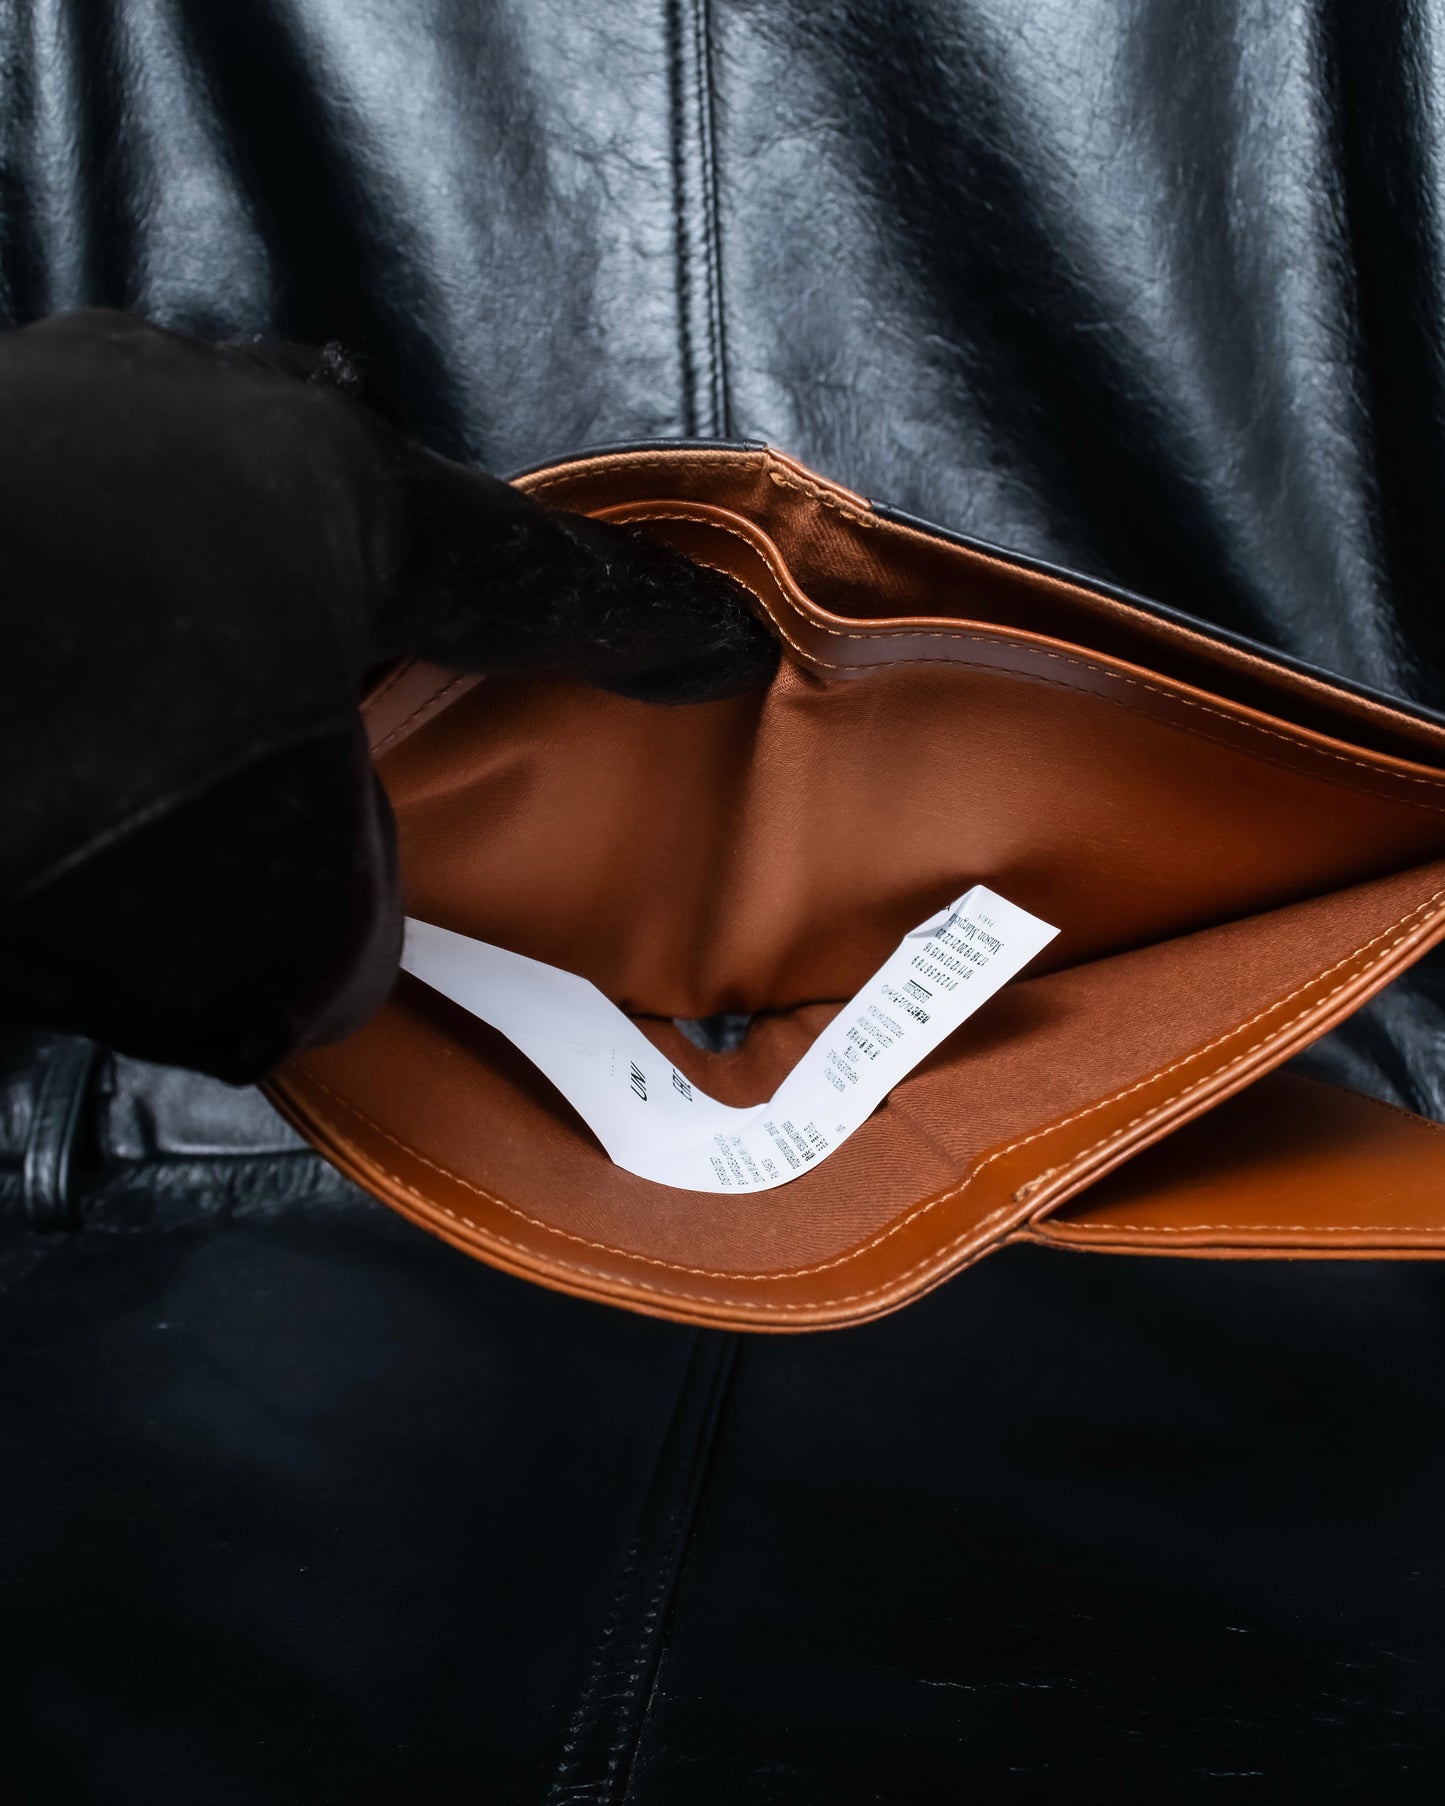 "Maison Margiela" Brown Leather Compact Wallet